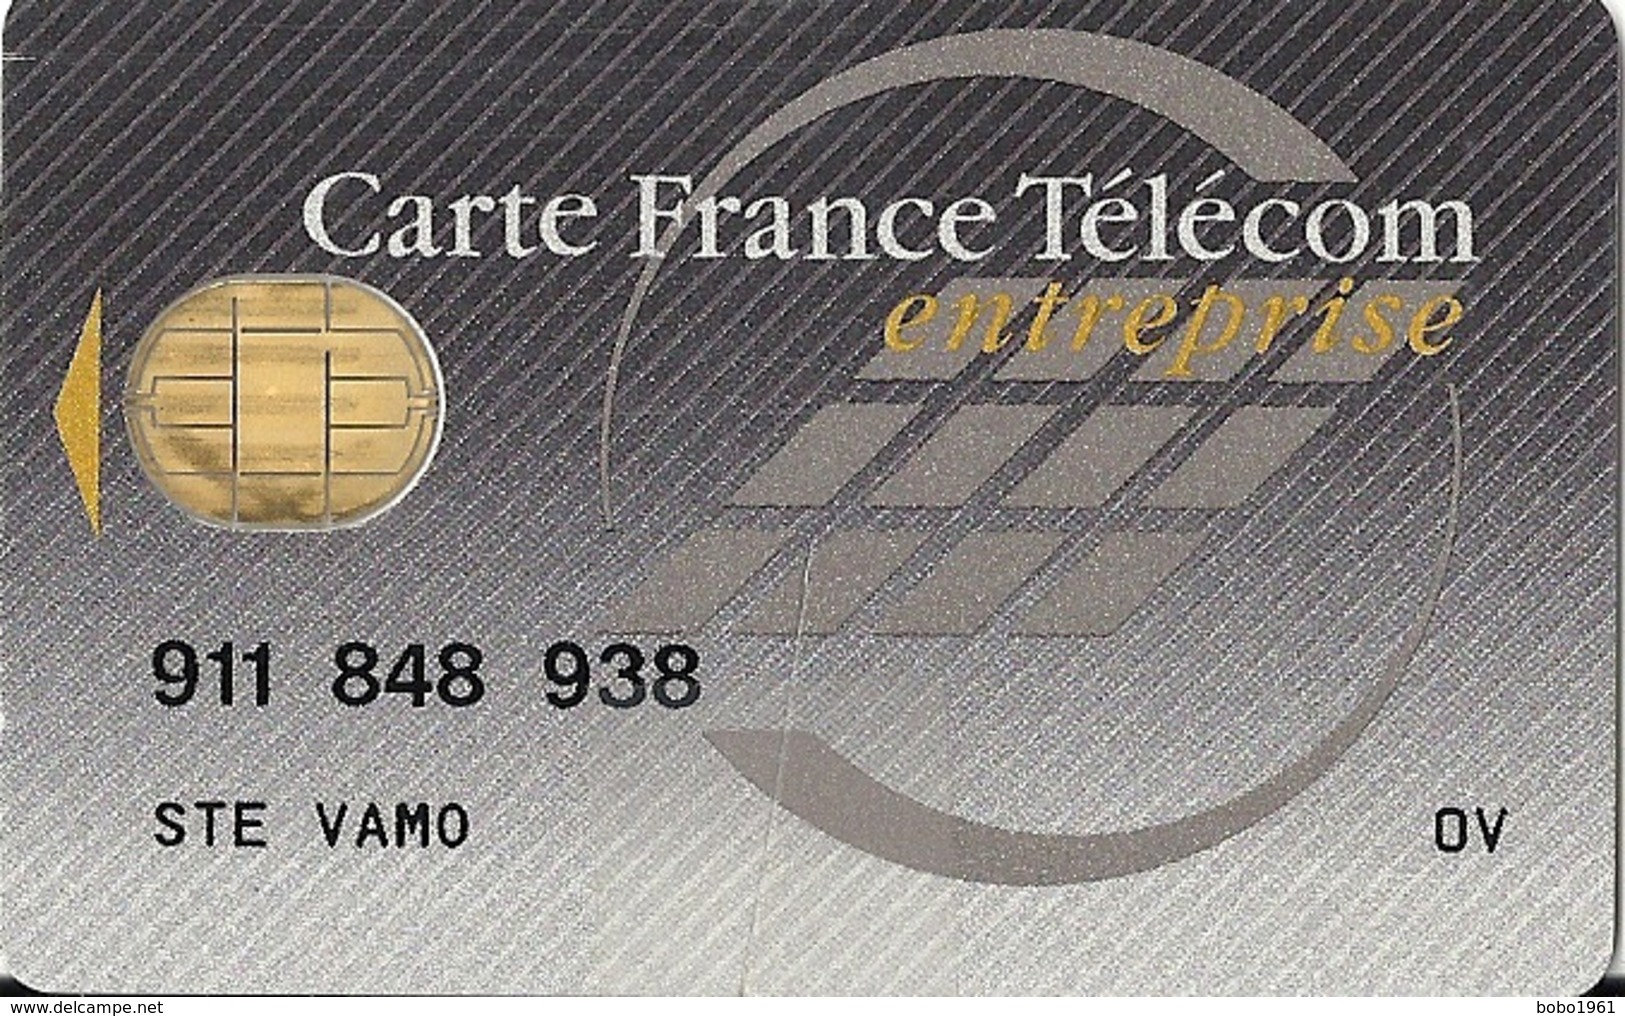 CARTE FRANCE TELECOM ENTREPRISE - STE VAMO - Zubehör